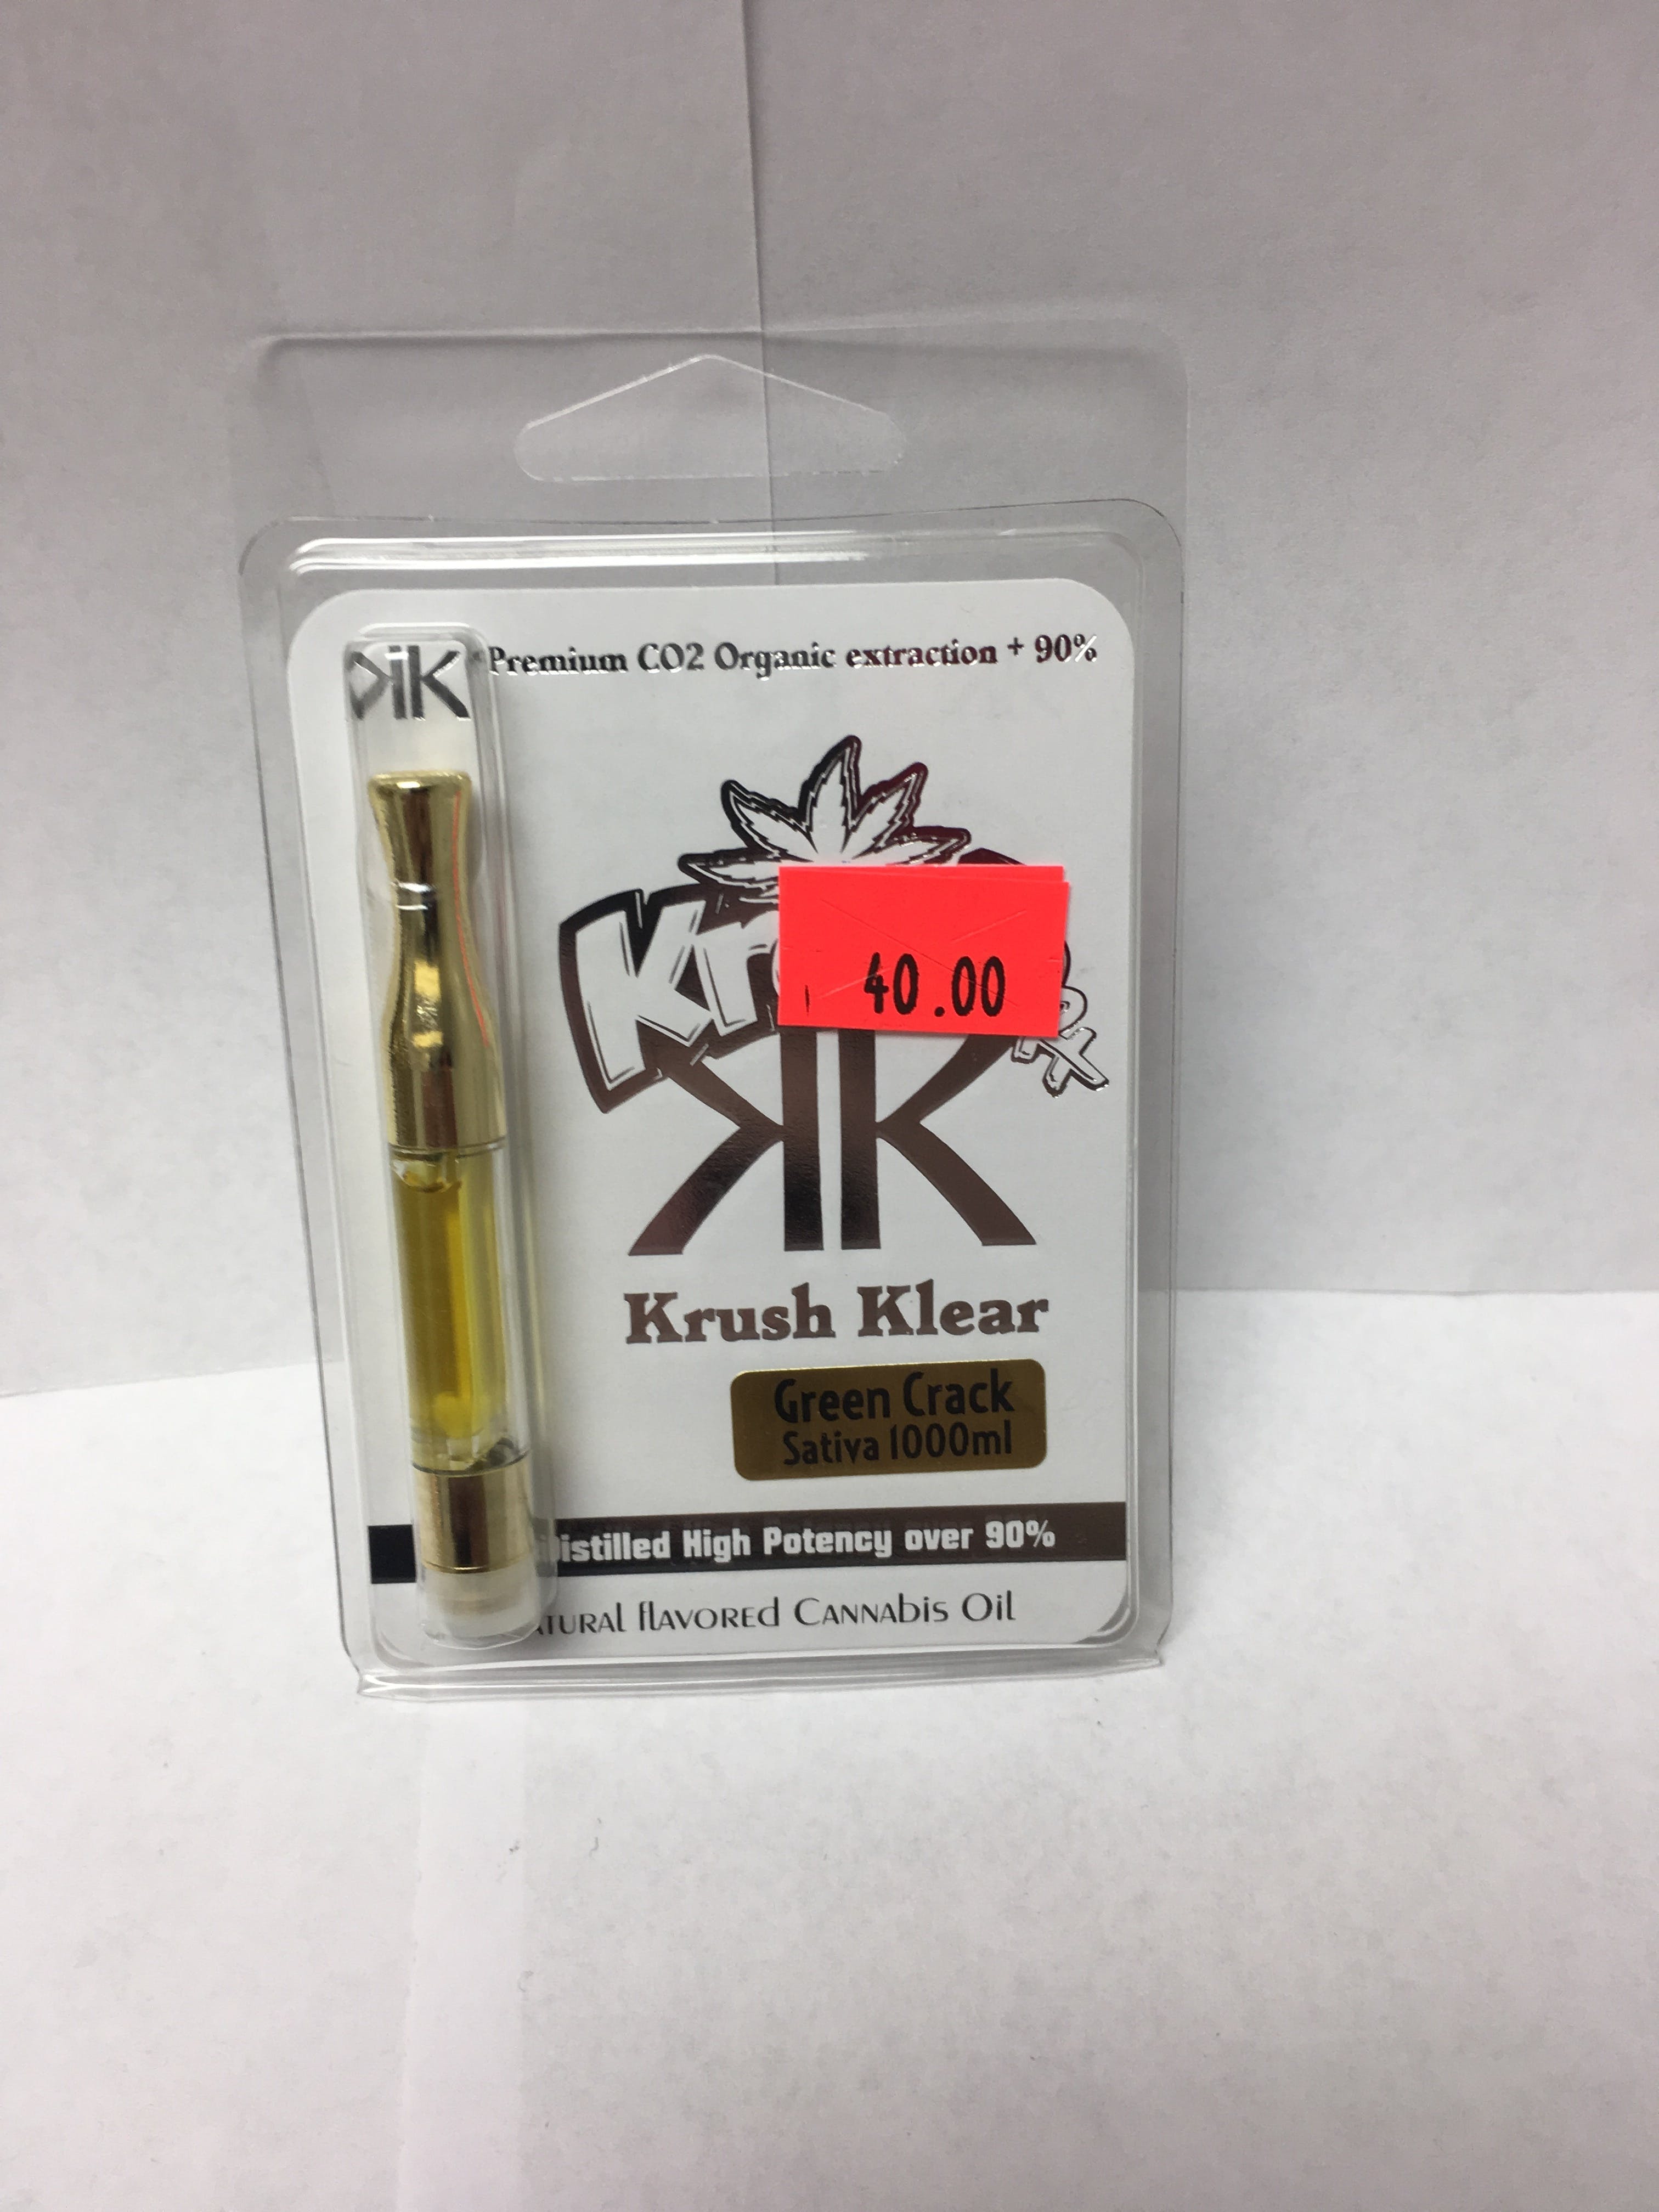 Krush Klear Green Crack Cartridge